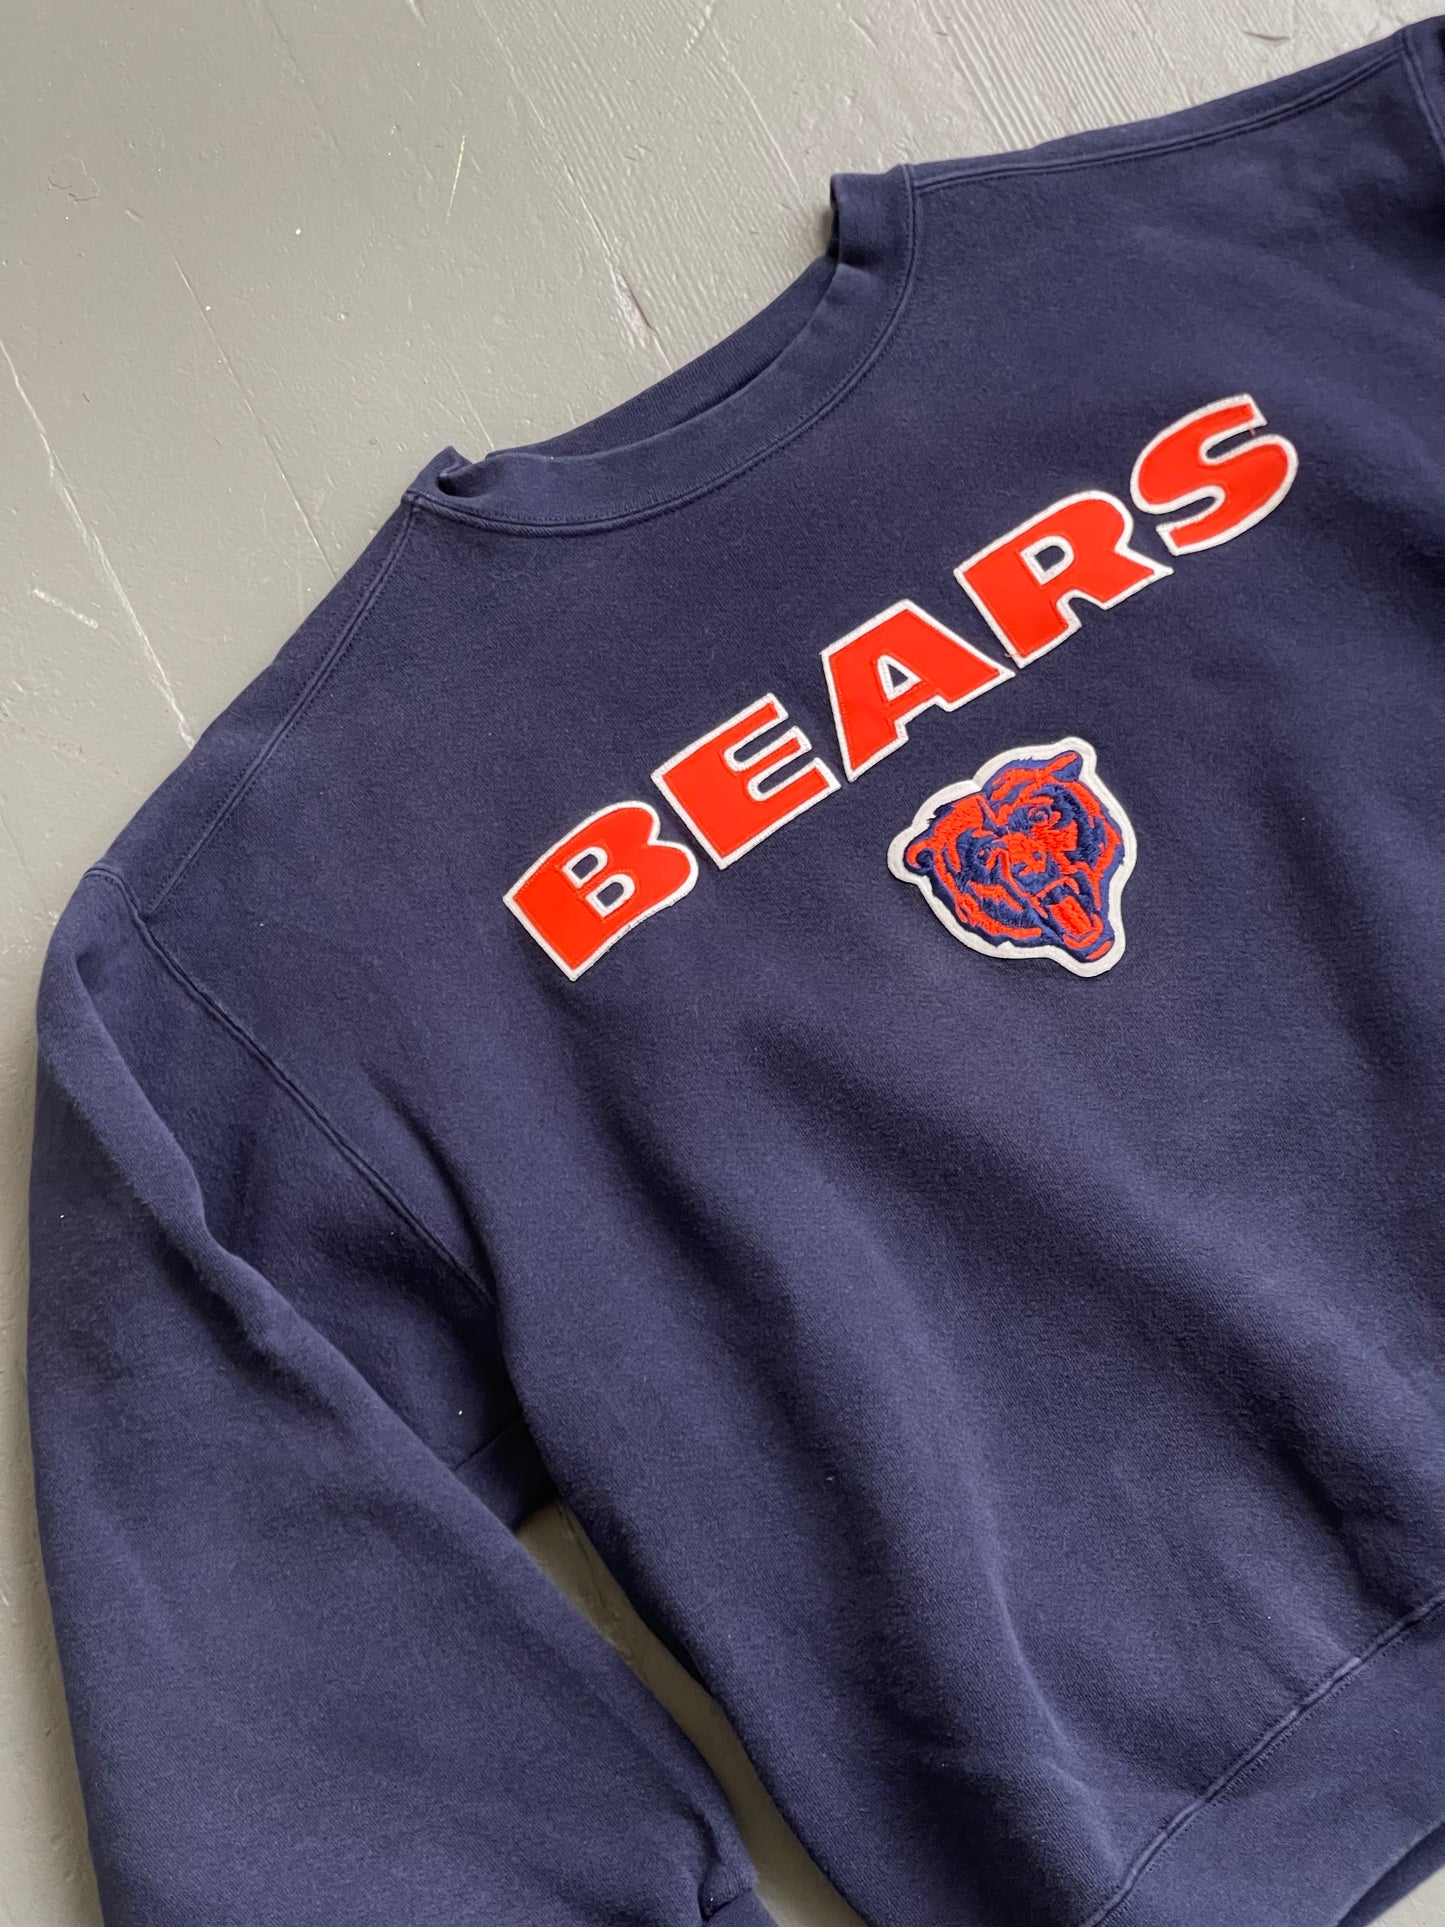 Vintage Chicago Bears Sweatshirt - XL